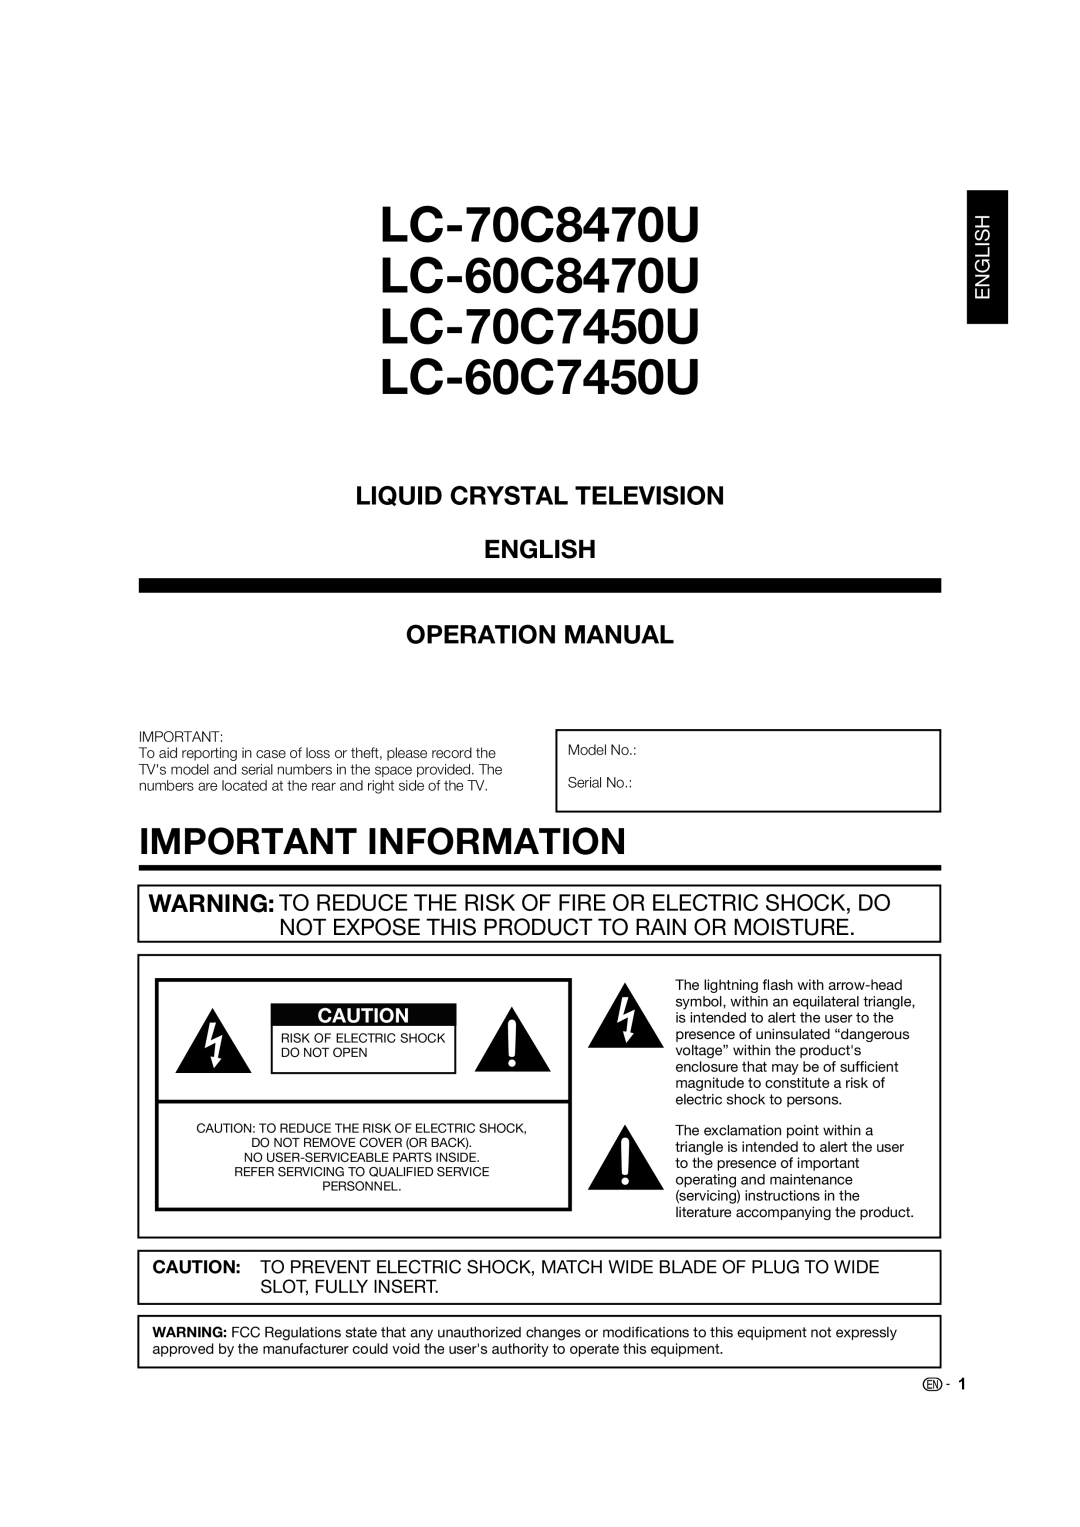 Sharp operation manual Important Information, LC-70C8470U LC-60C8470U LC-70C7450U LC-60C7450U, English 